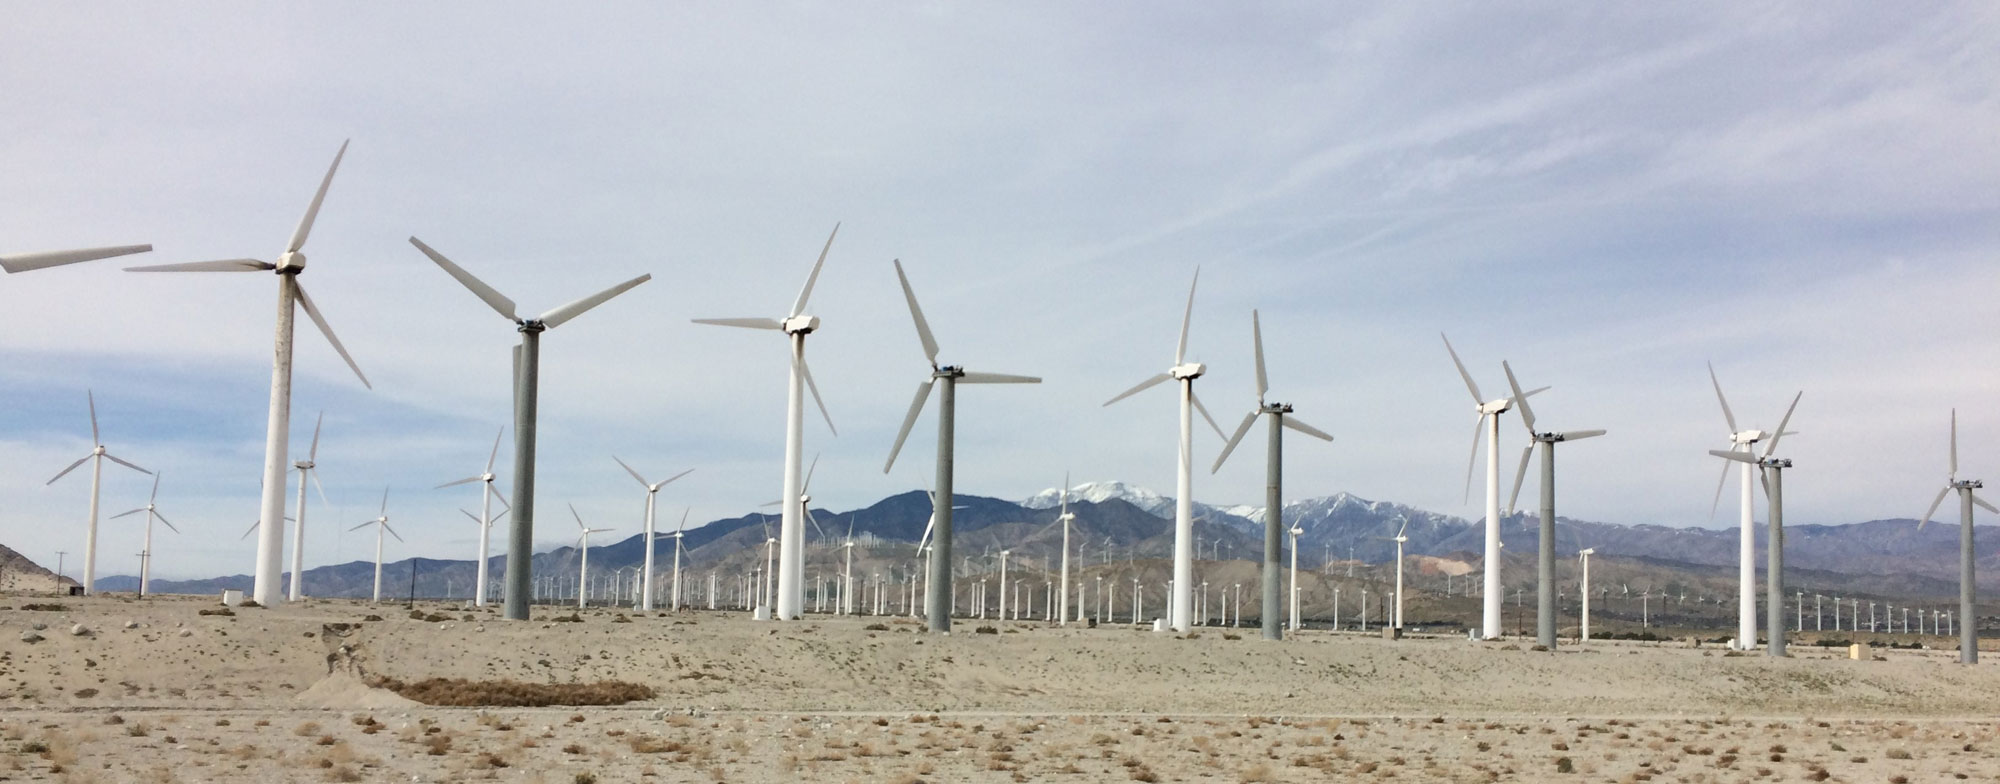 Photograph of a wind farm in California.